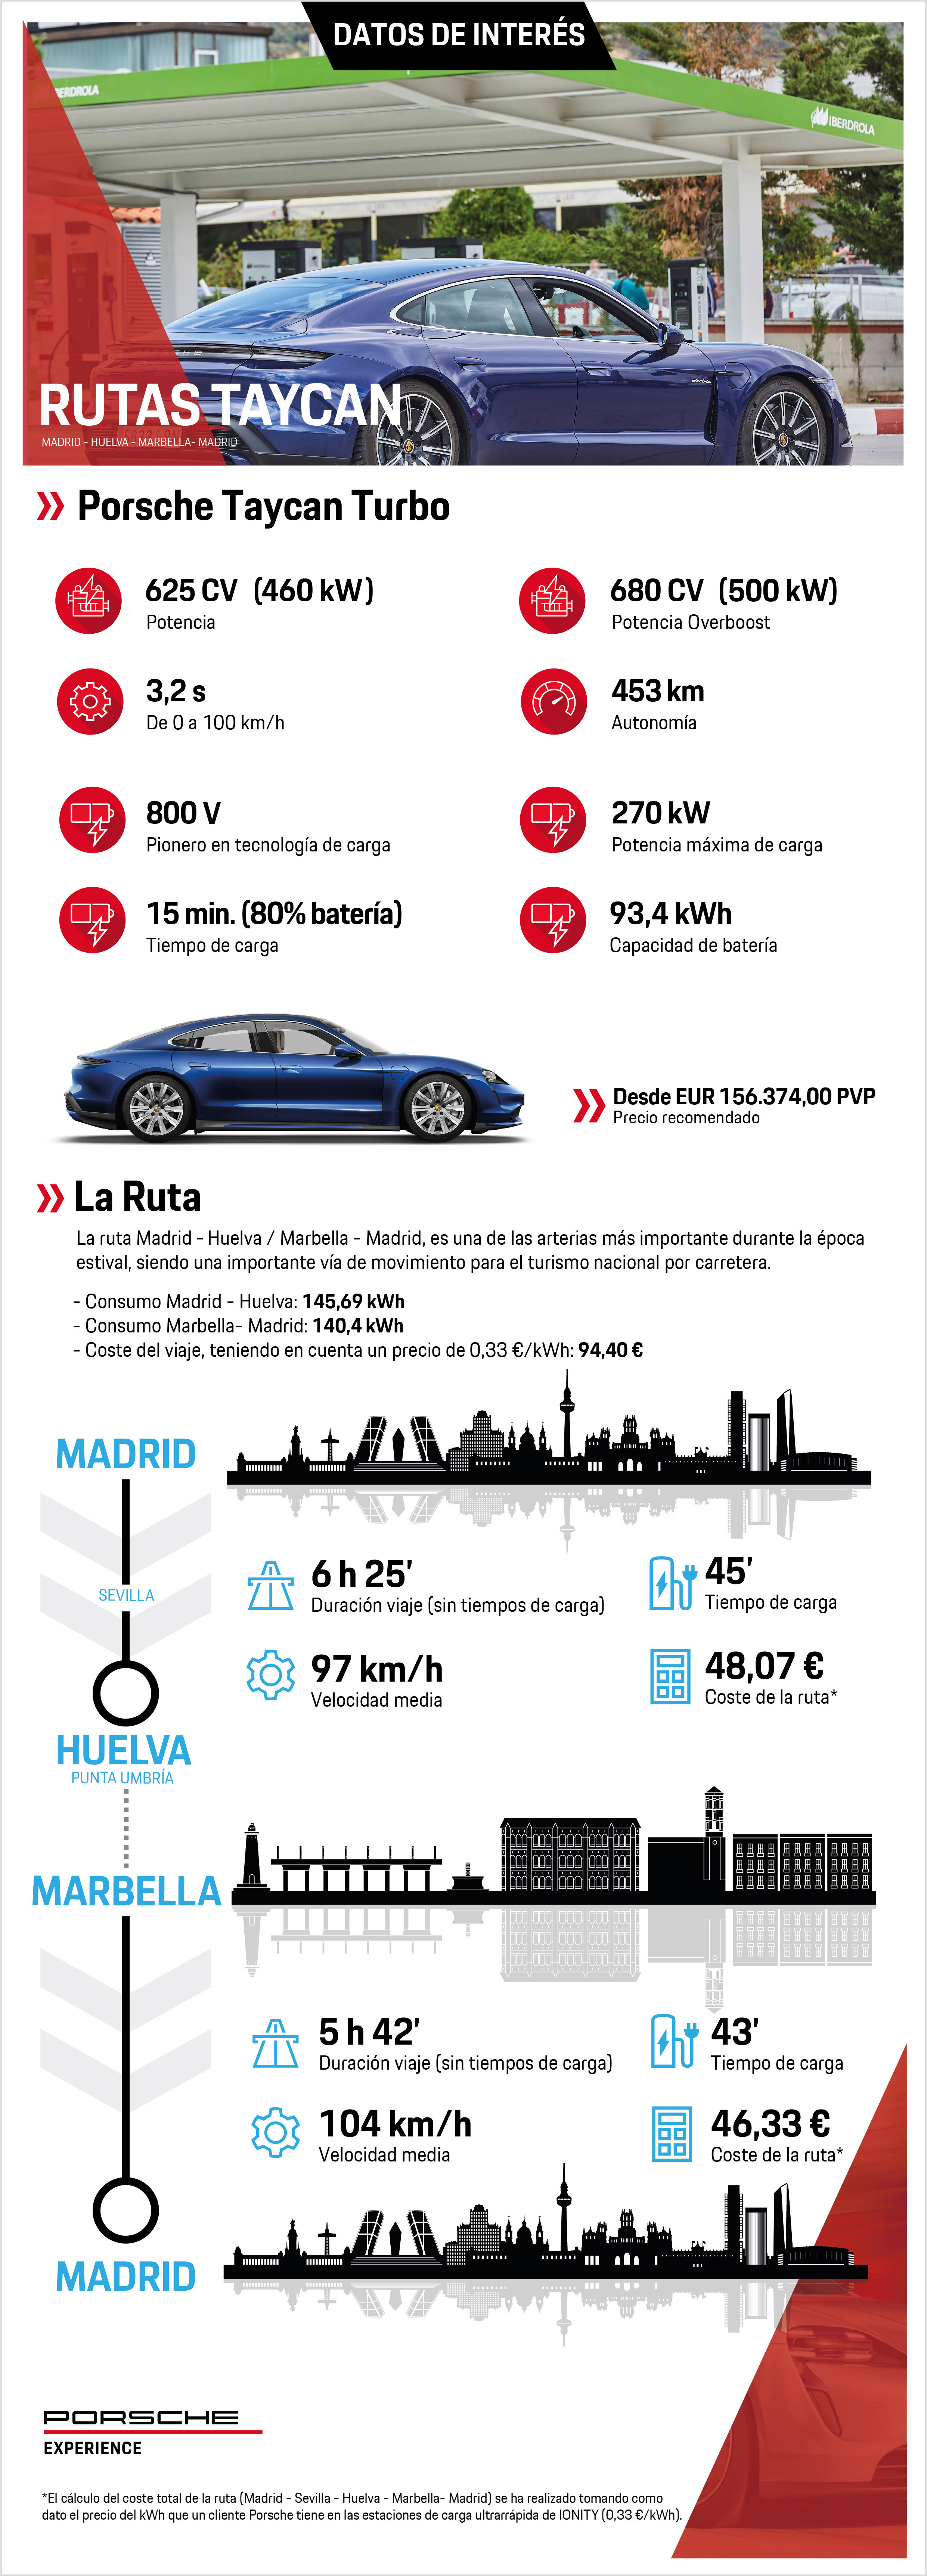 Infografía, Ruta Taycan Madrid - Huelva, Marbella - Madrid, 2021, Porsche Ibérica